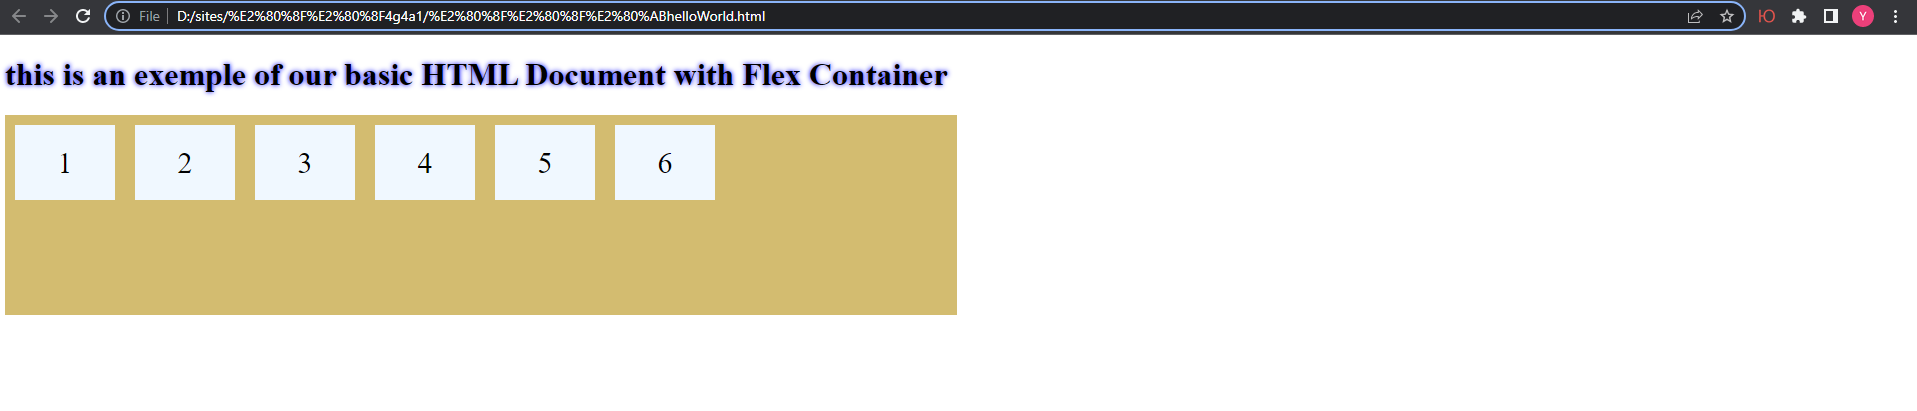 CSS in HTML - Flexbox align-items